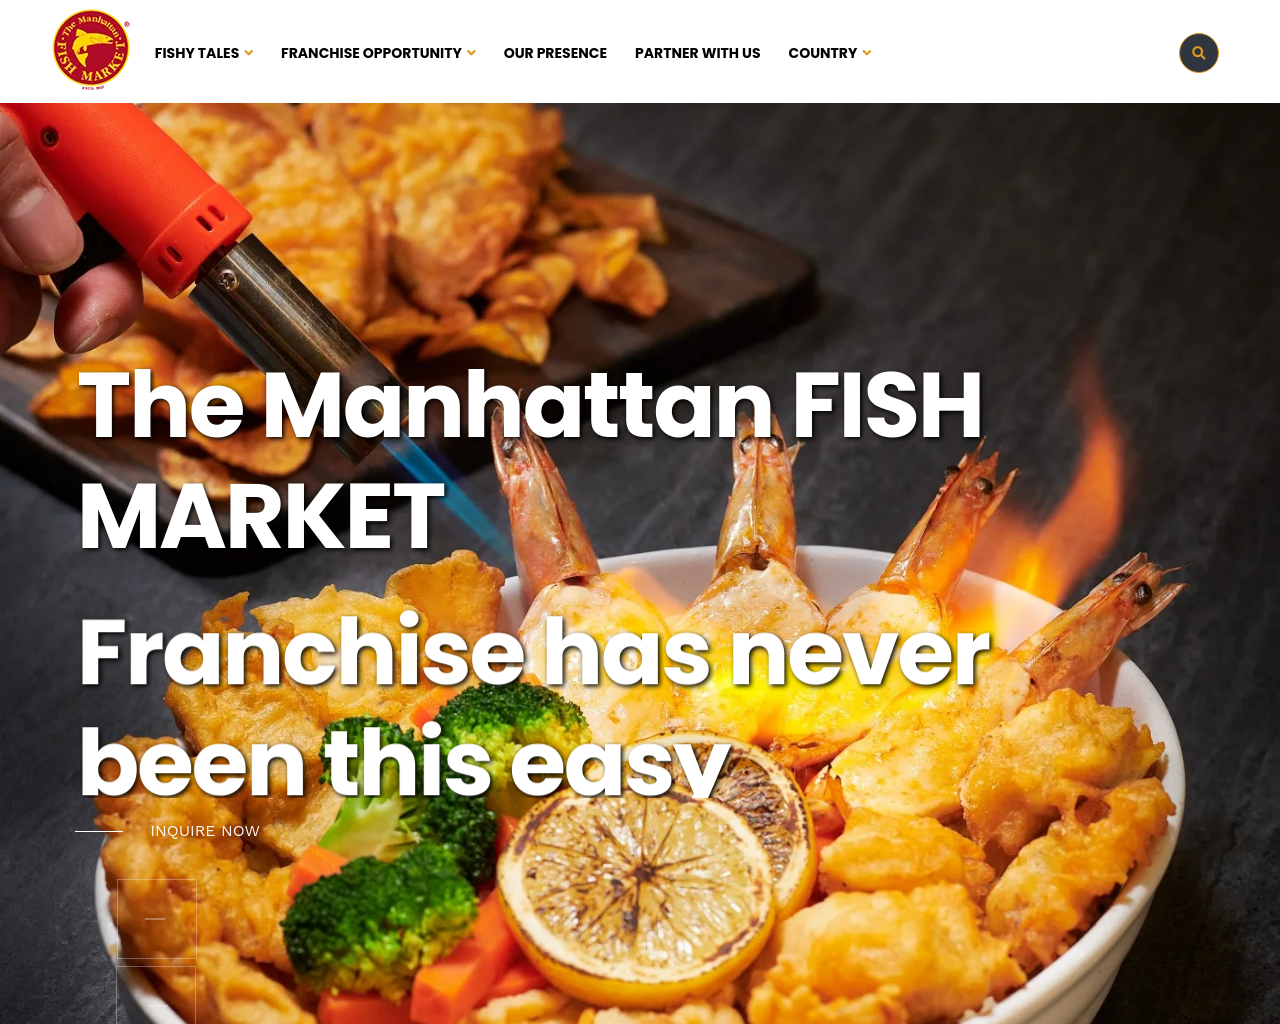 manhattanfishmarket.com